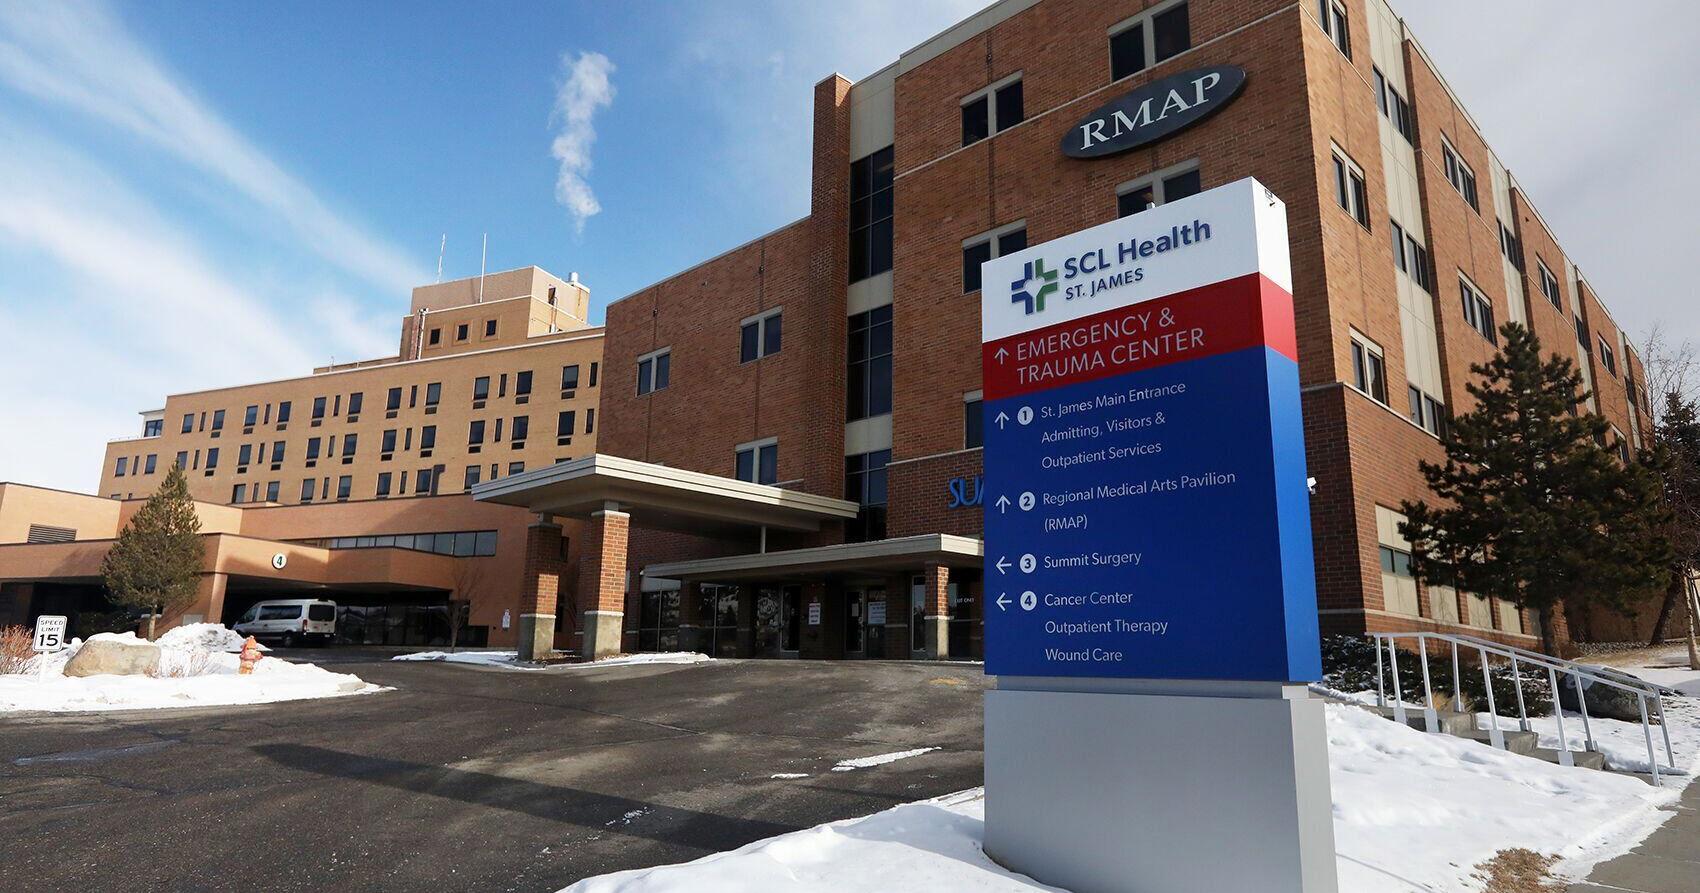 St. James hospital in Butte losing surgeons, union raises concerns about workers, patients